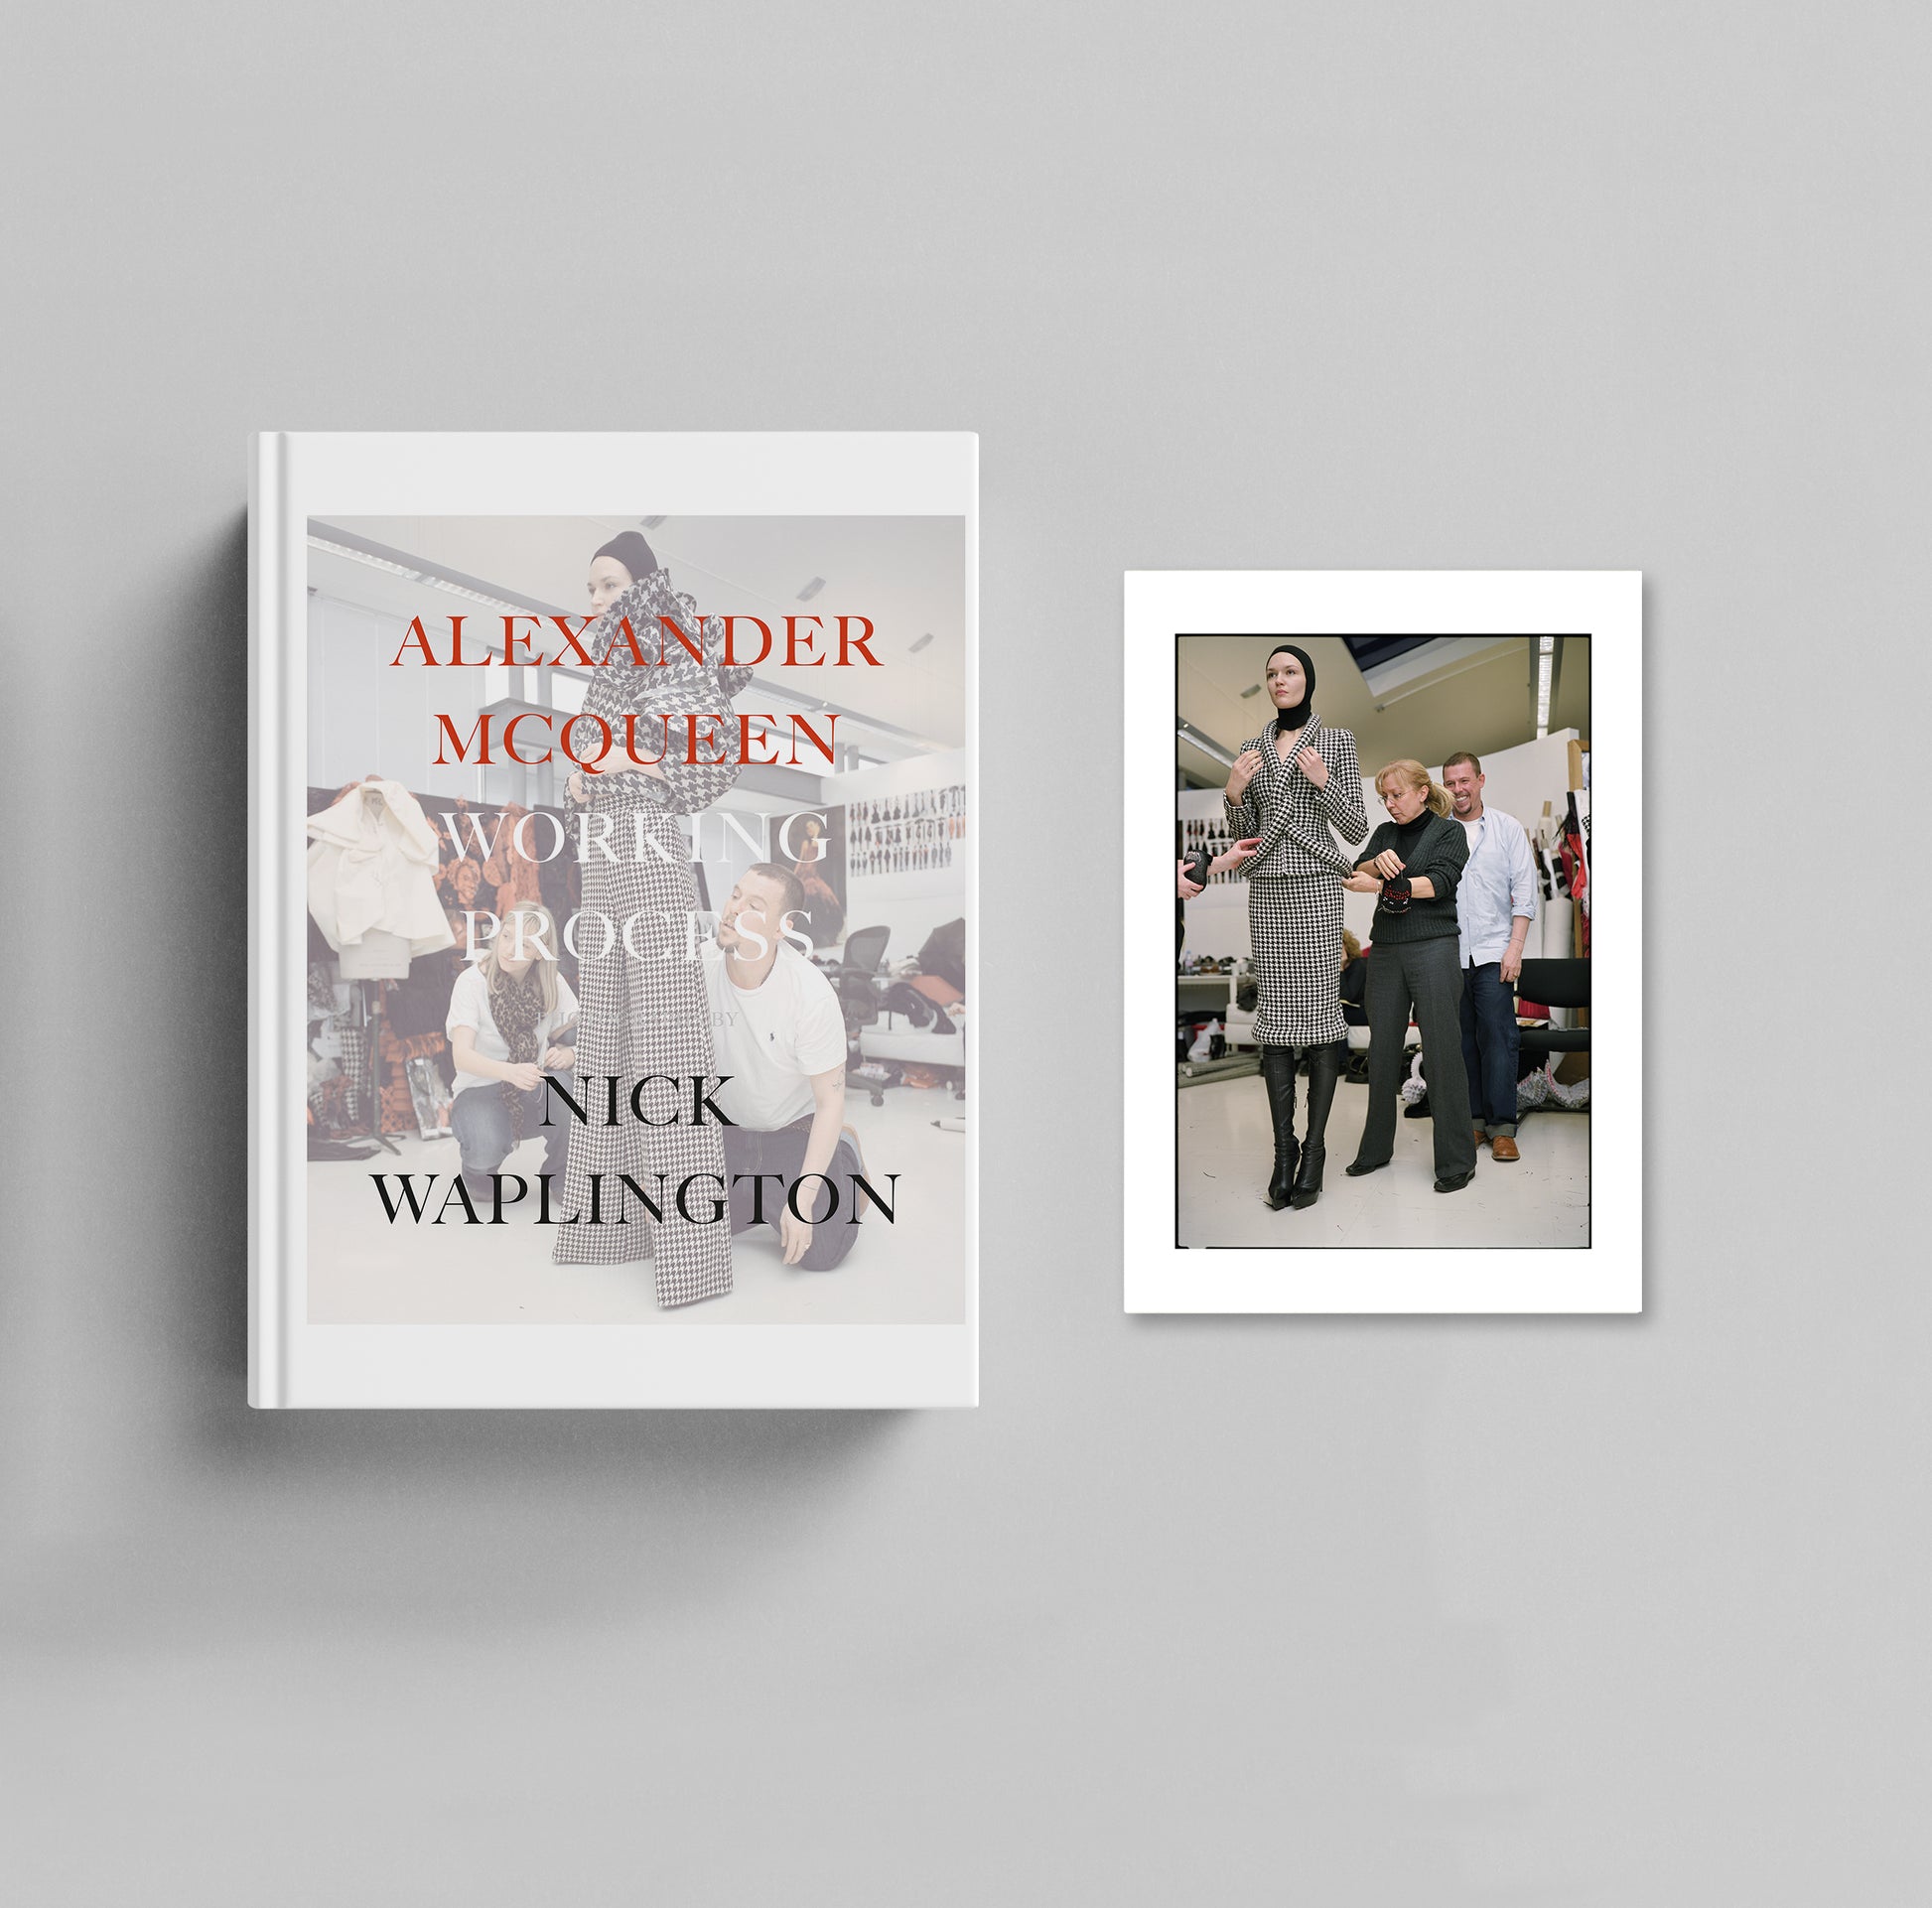 Alexander McQueen. Working Process. Photographs by Nick Waplington | Collector's Edition Default Title